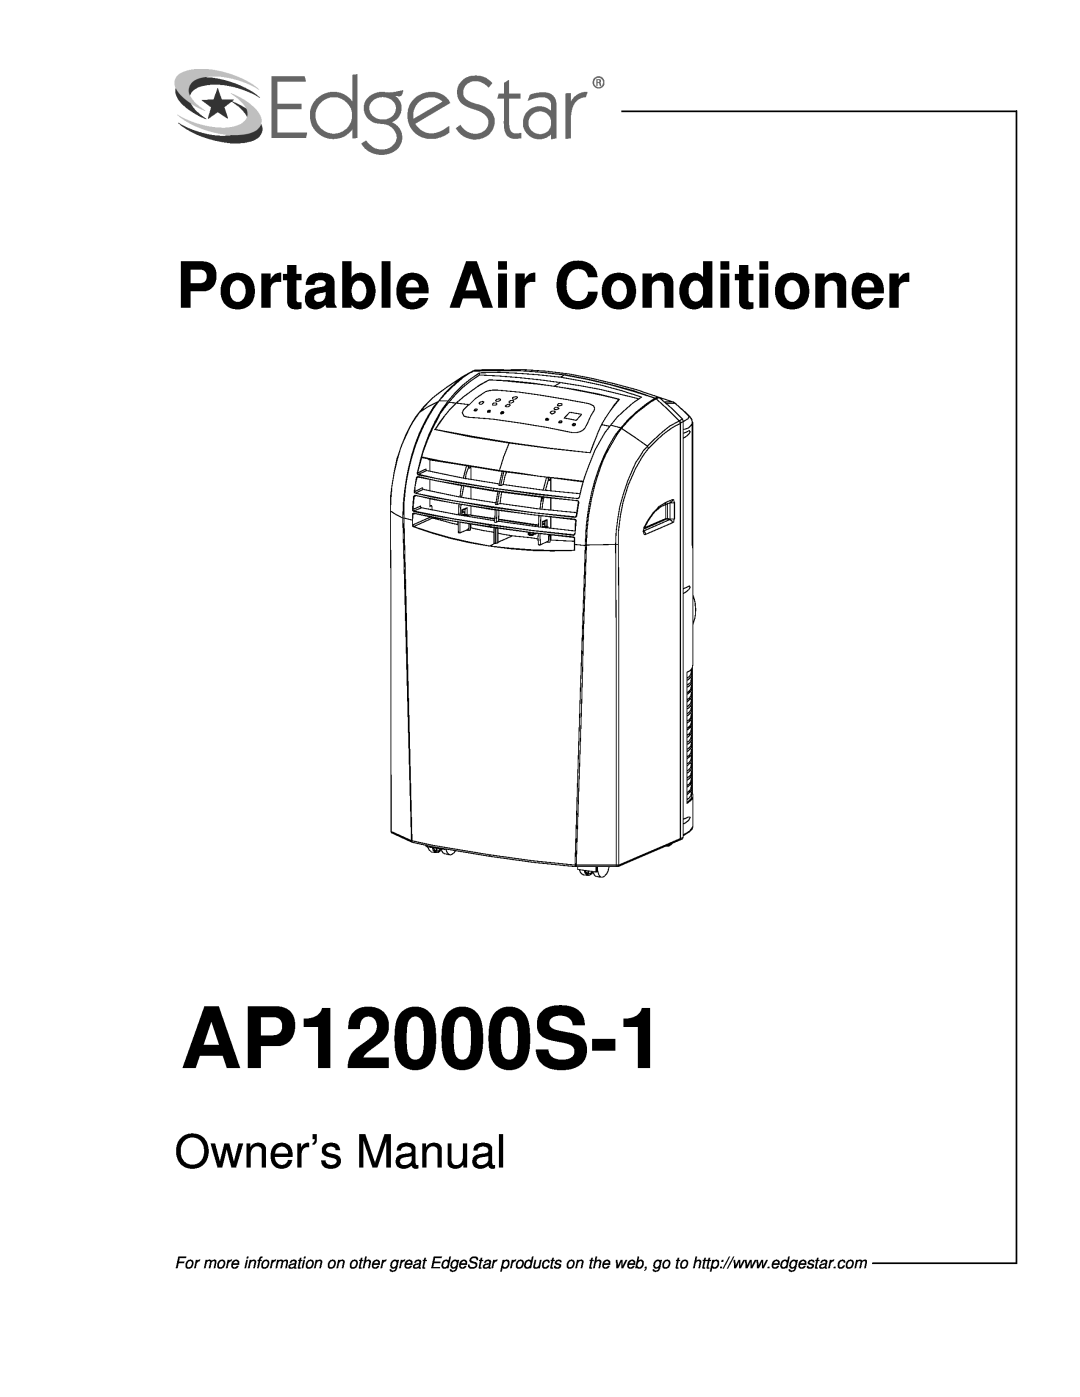 EdgeStar AP12000S-1 owner manual Portable Air Conditioner 